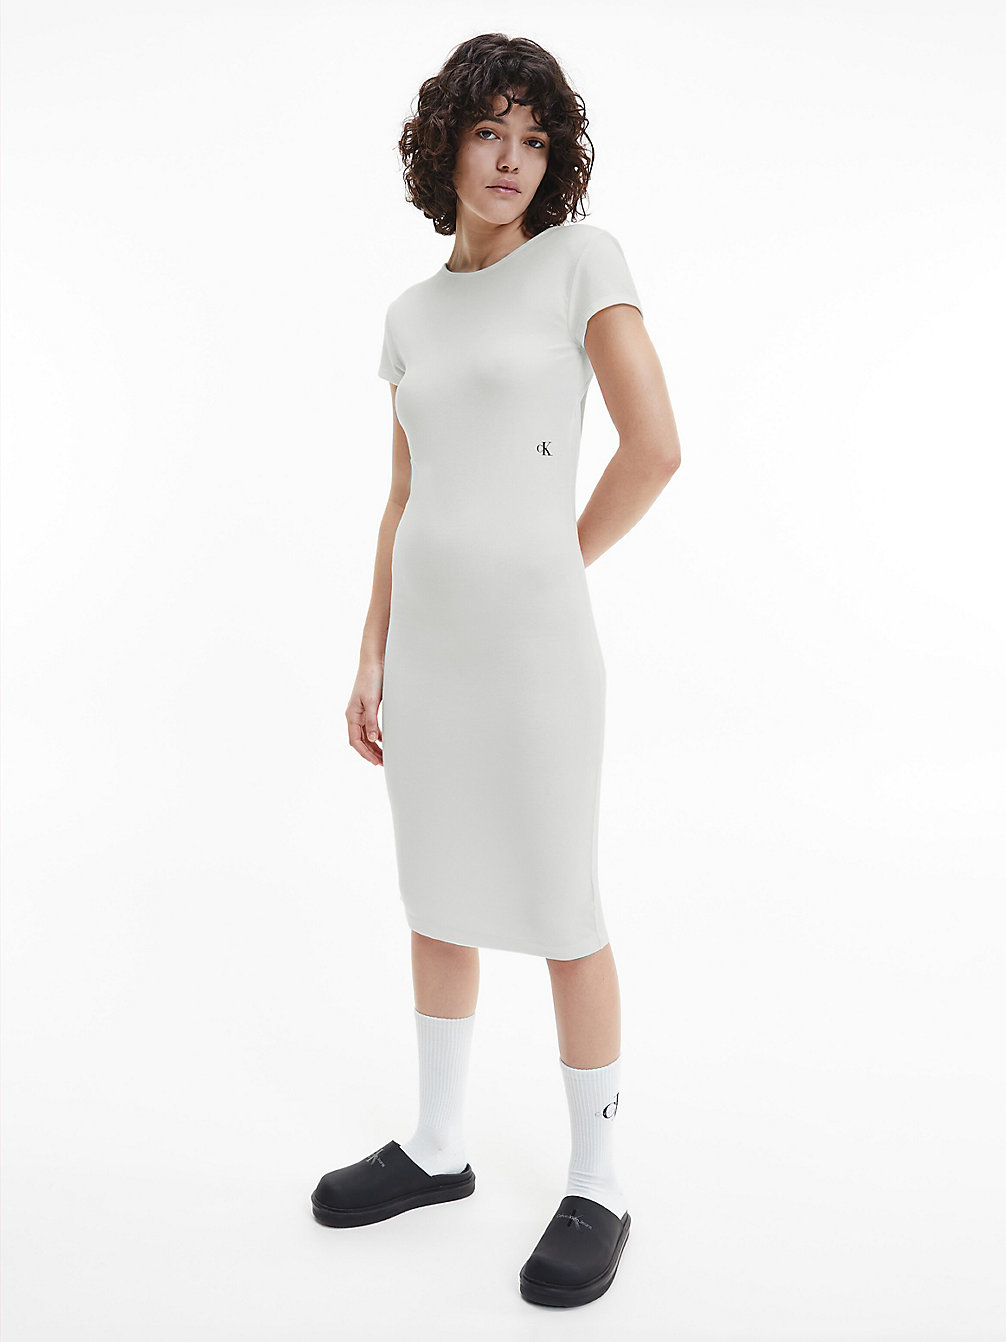 BRIGHT WHITE > Dopasowane Sukienka Midi Z Odkrytymi Plecami > undefined Kobiety - Calvin Klein